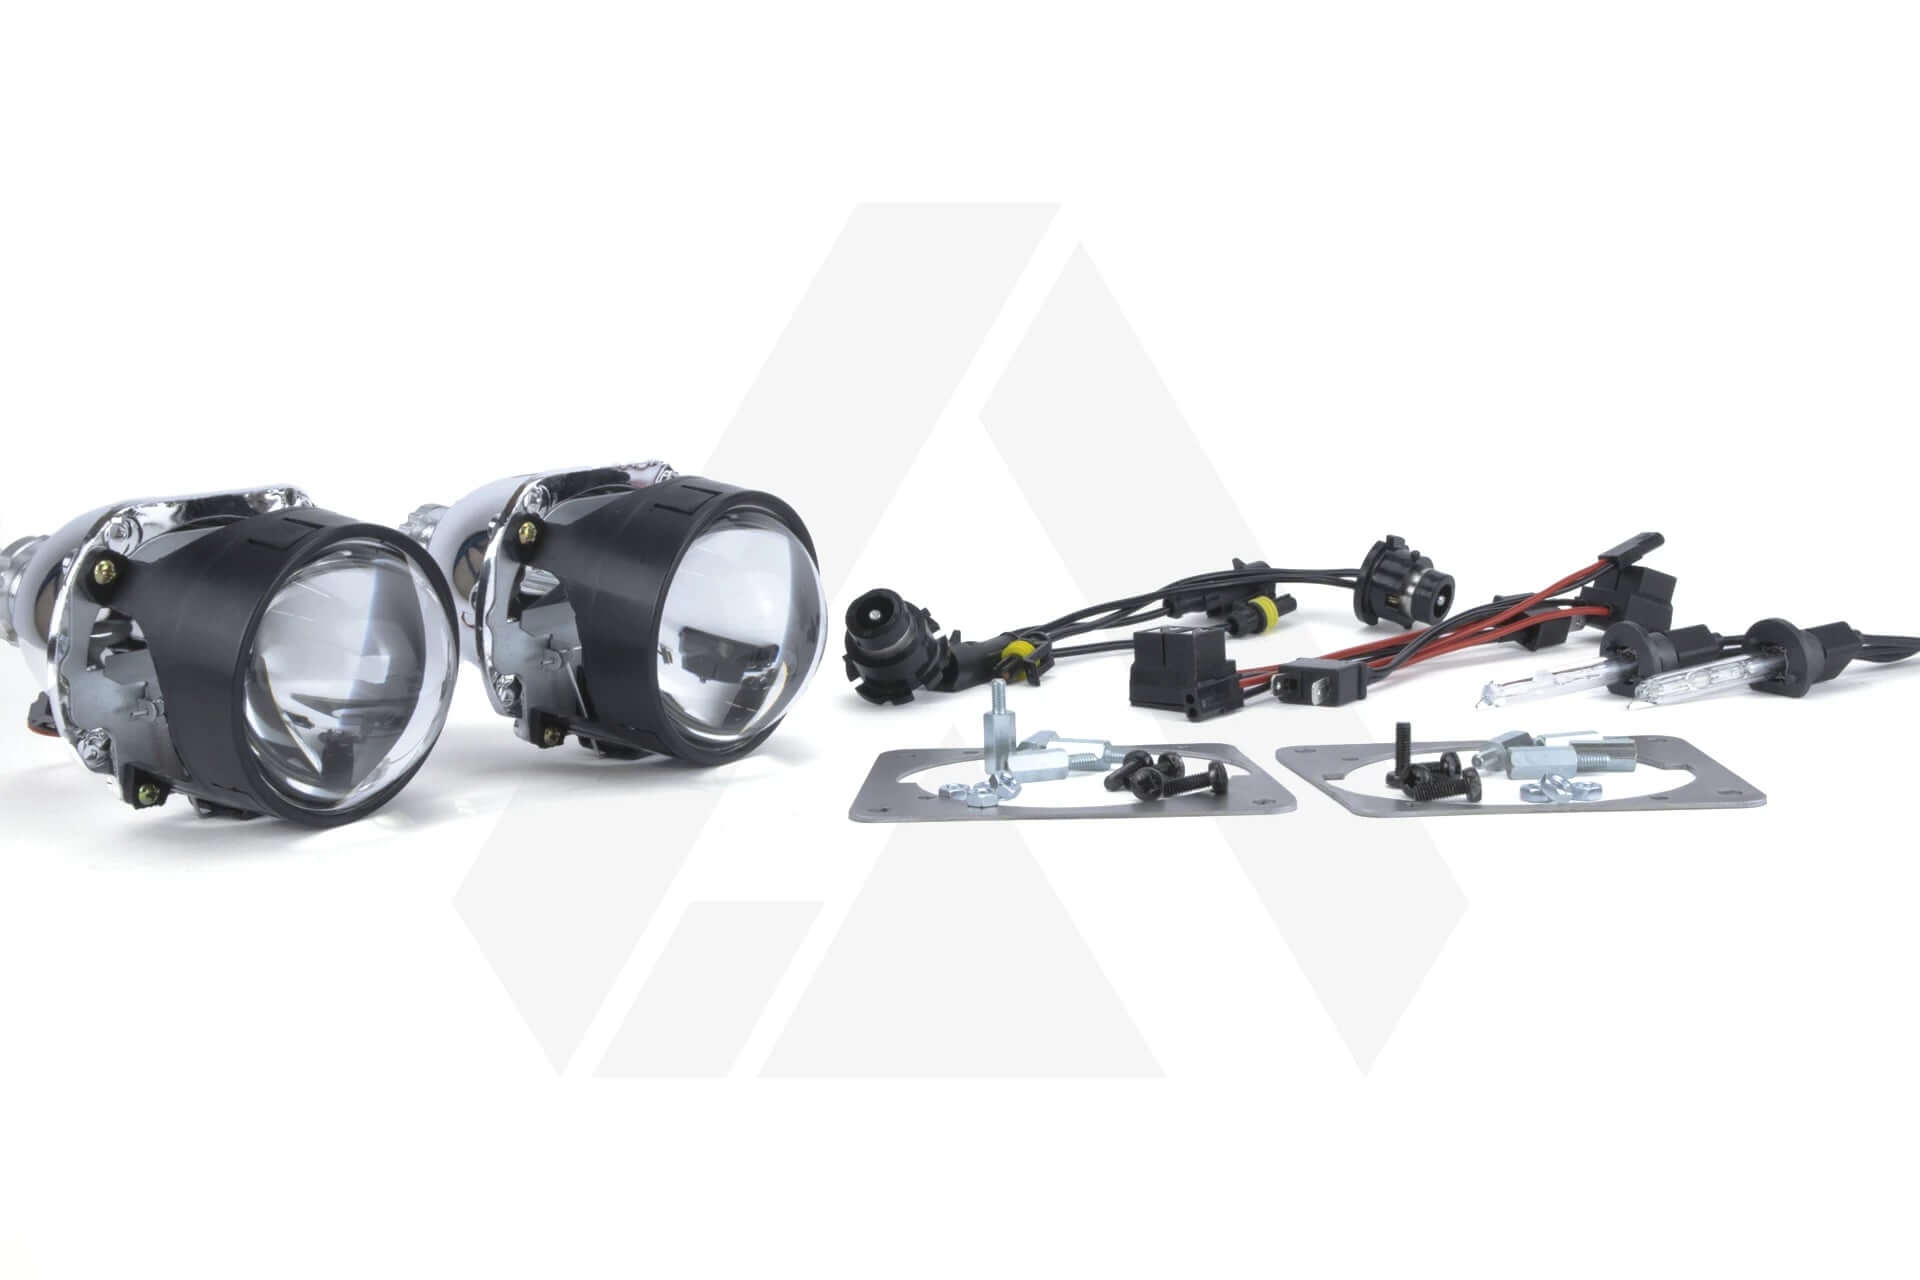 Opel Vectra B Facelift 99-01 bi-xenon HID headlight repair & upgrade kit for xenon HID headlights